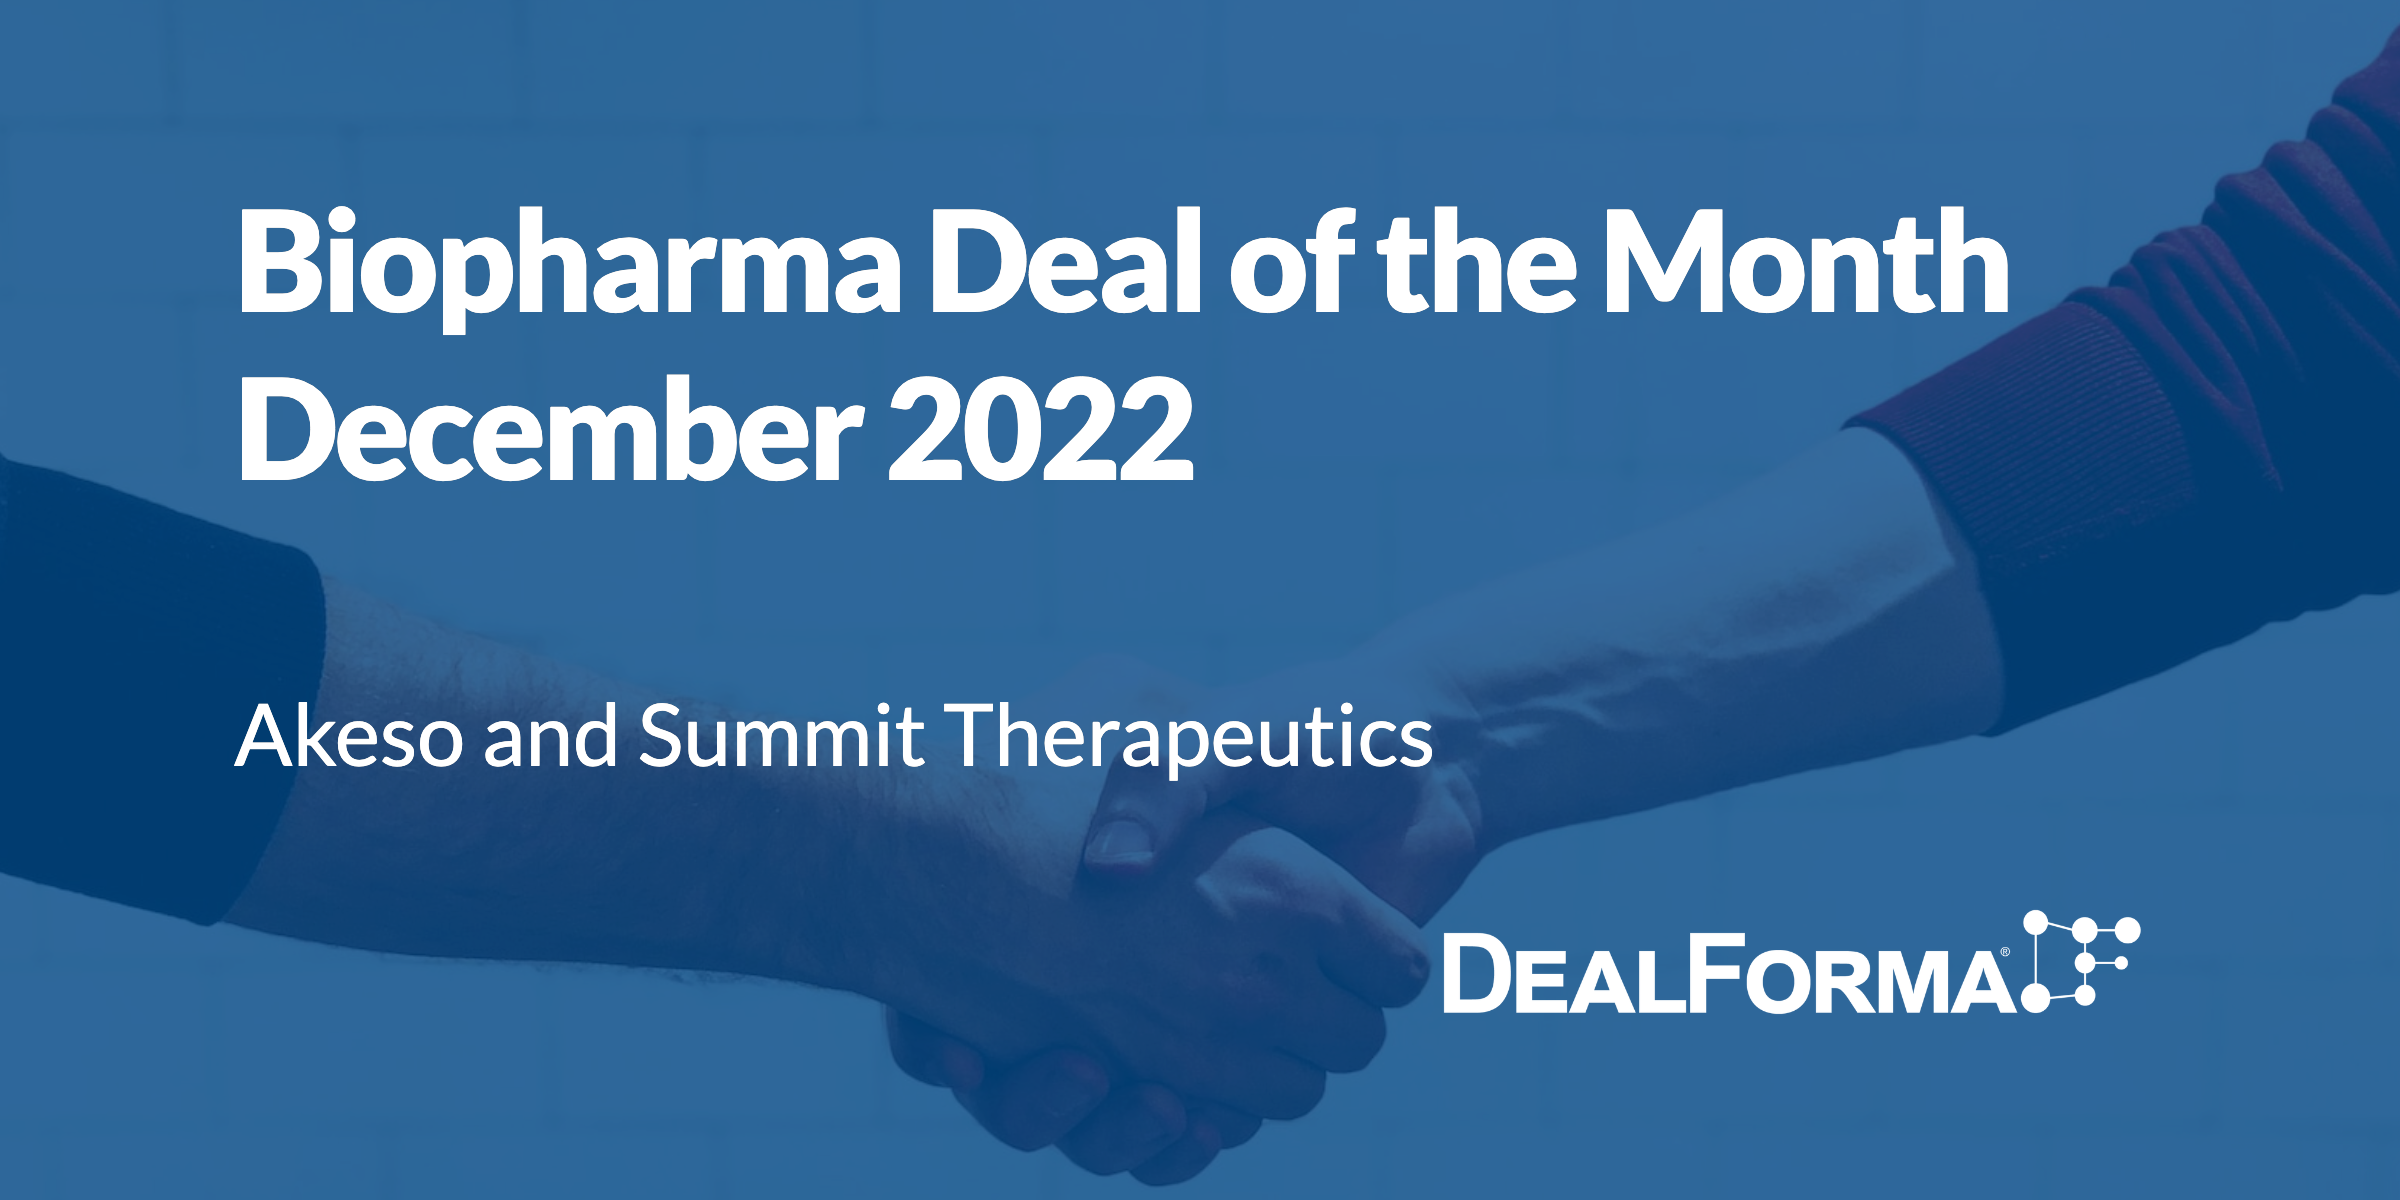 Top biopharma deal upfront Dec. 2022